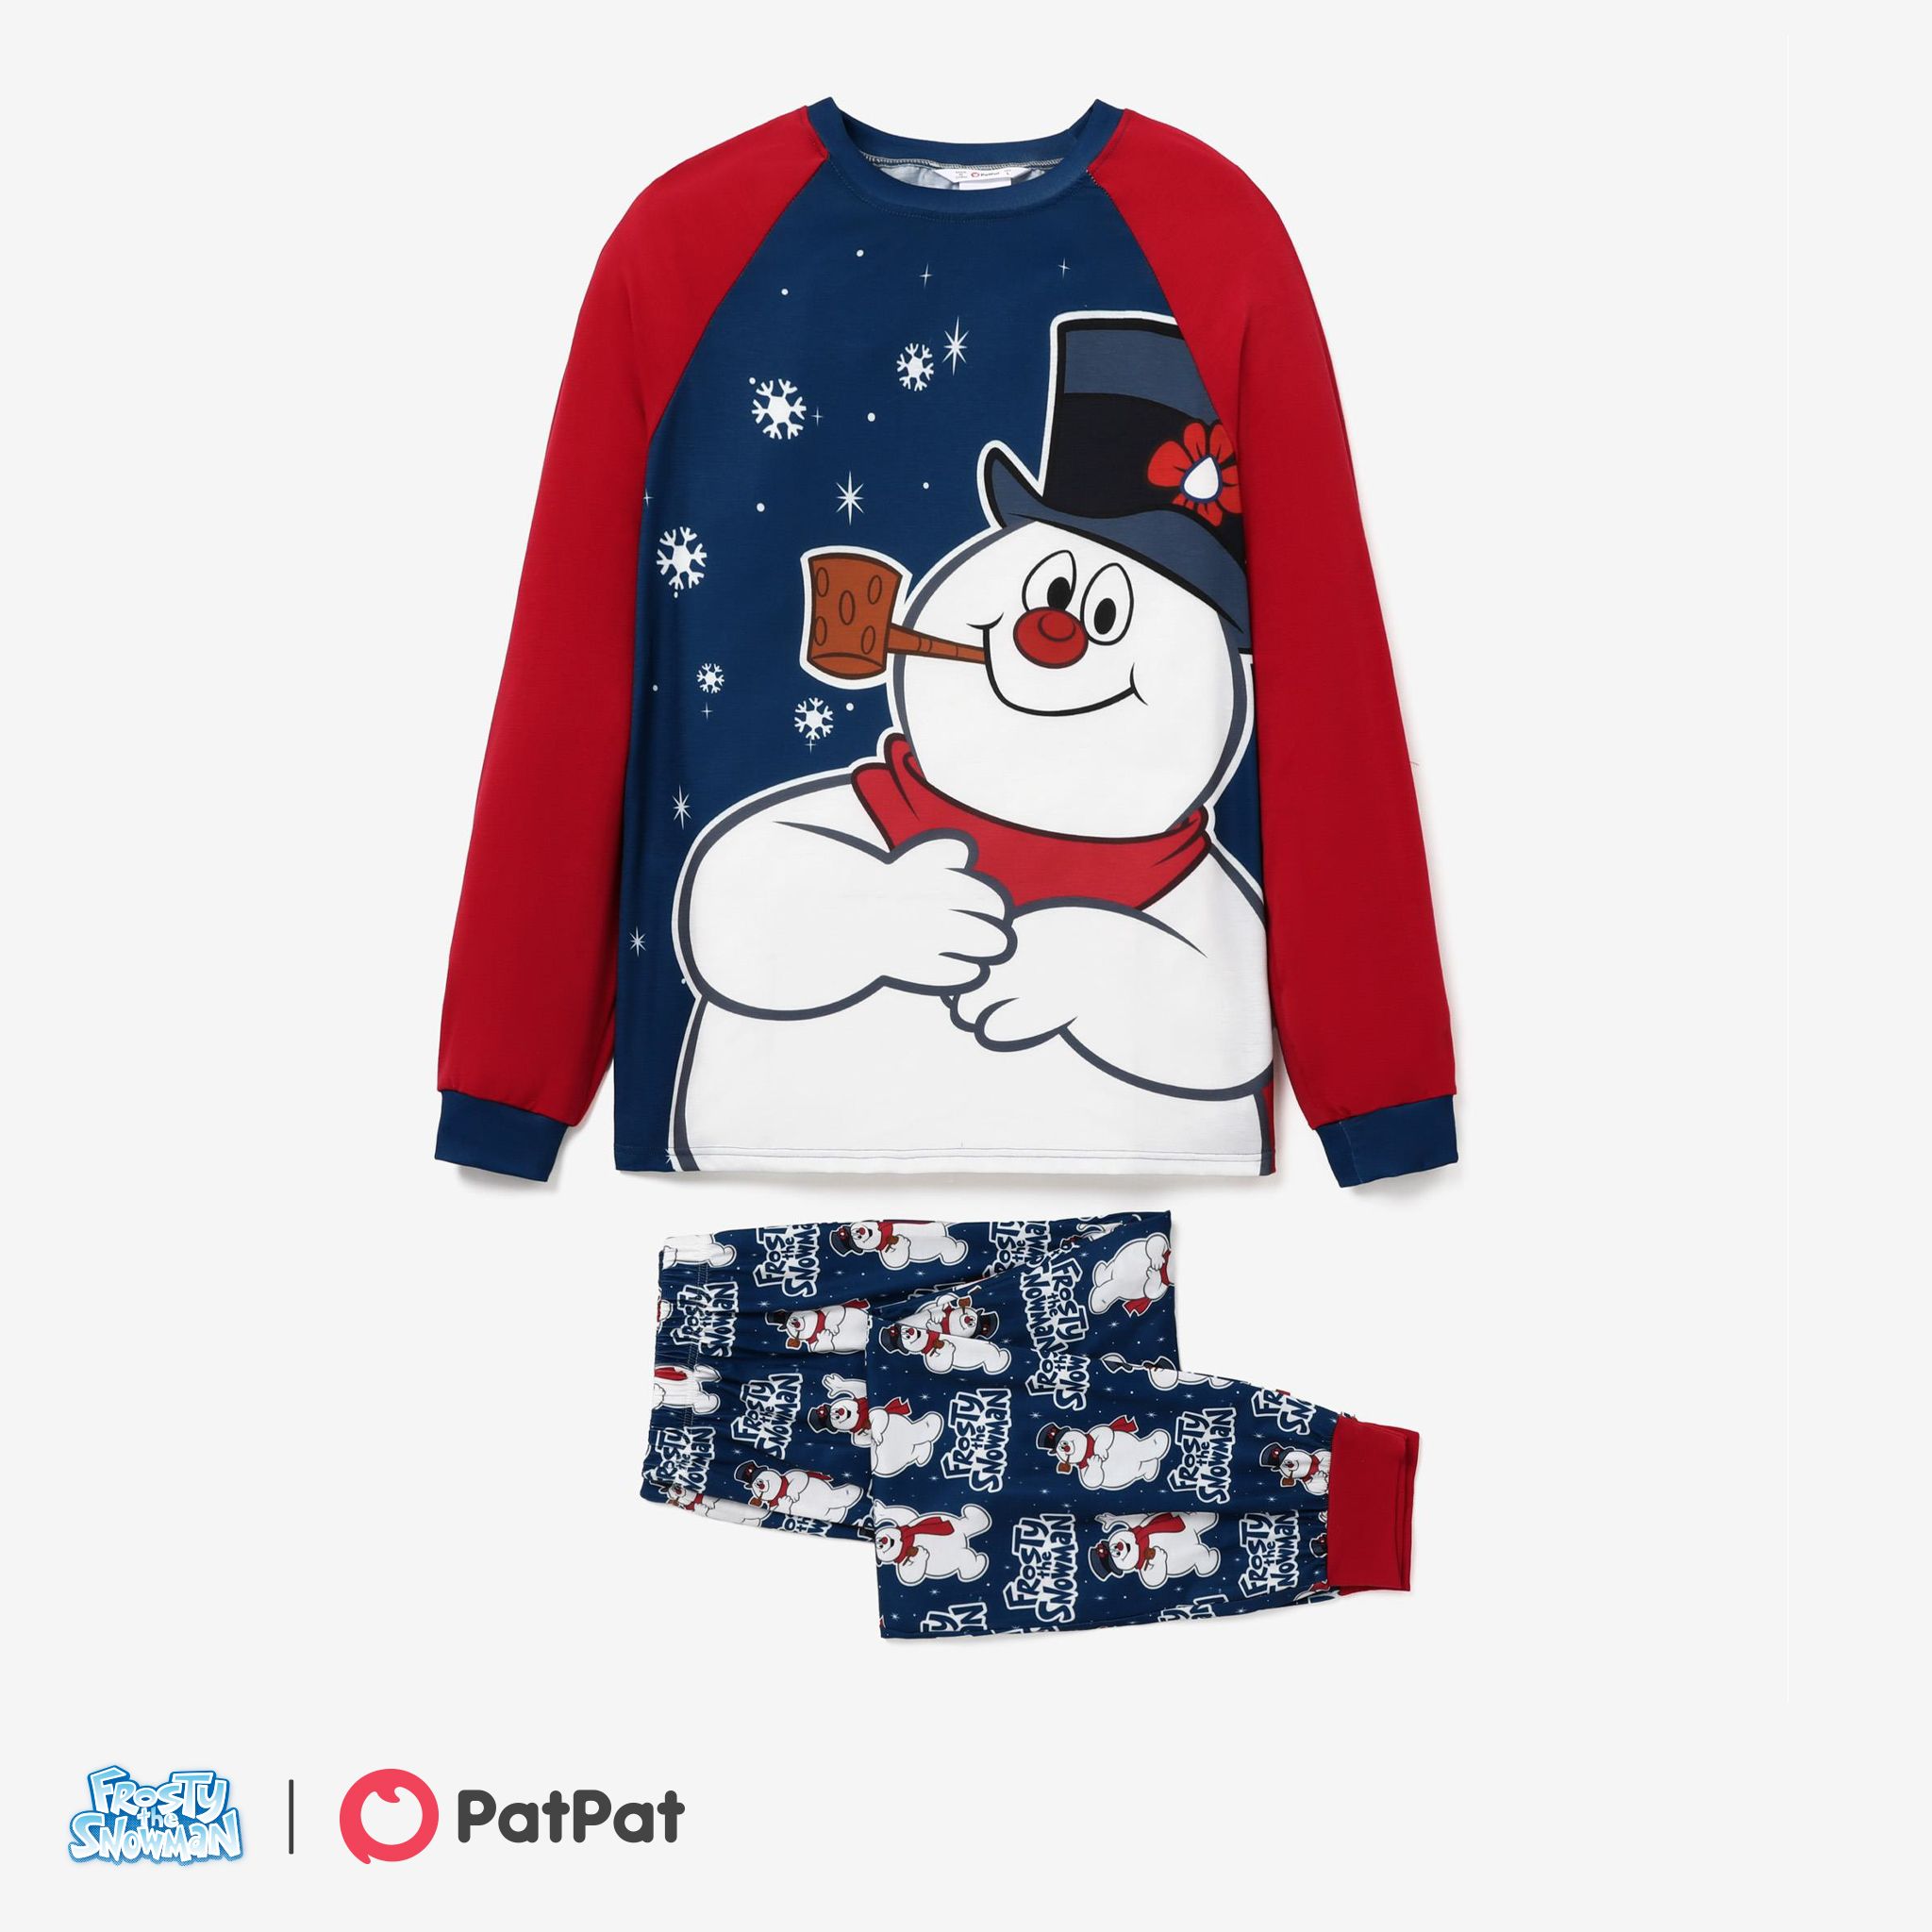 Pijama de manga larga navideña a juego de la familia Frosty The Snowman (resistencia a las llamas)